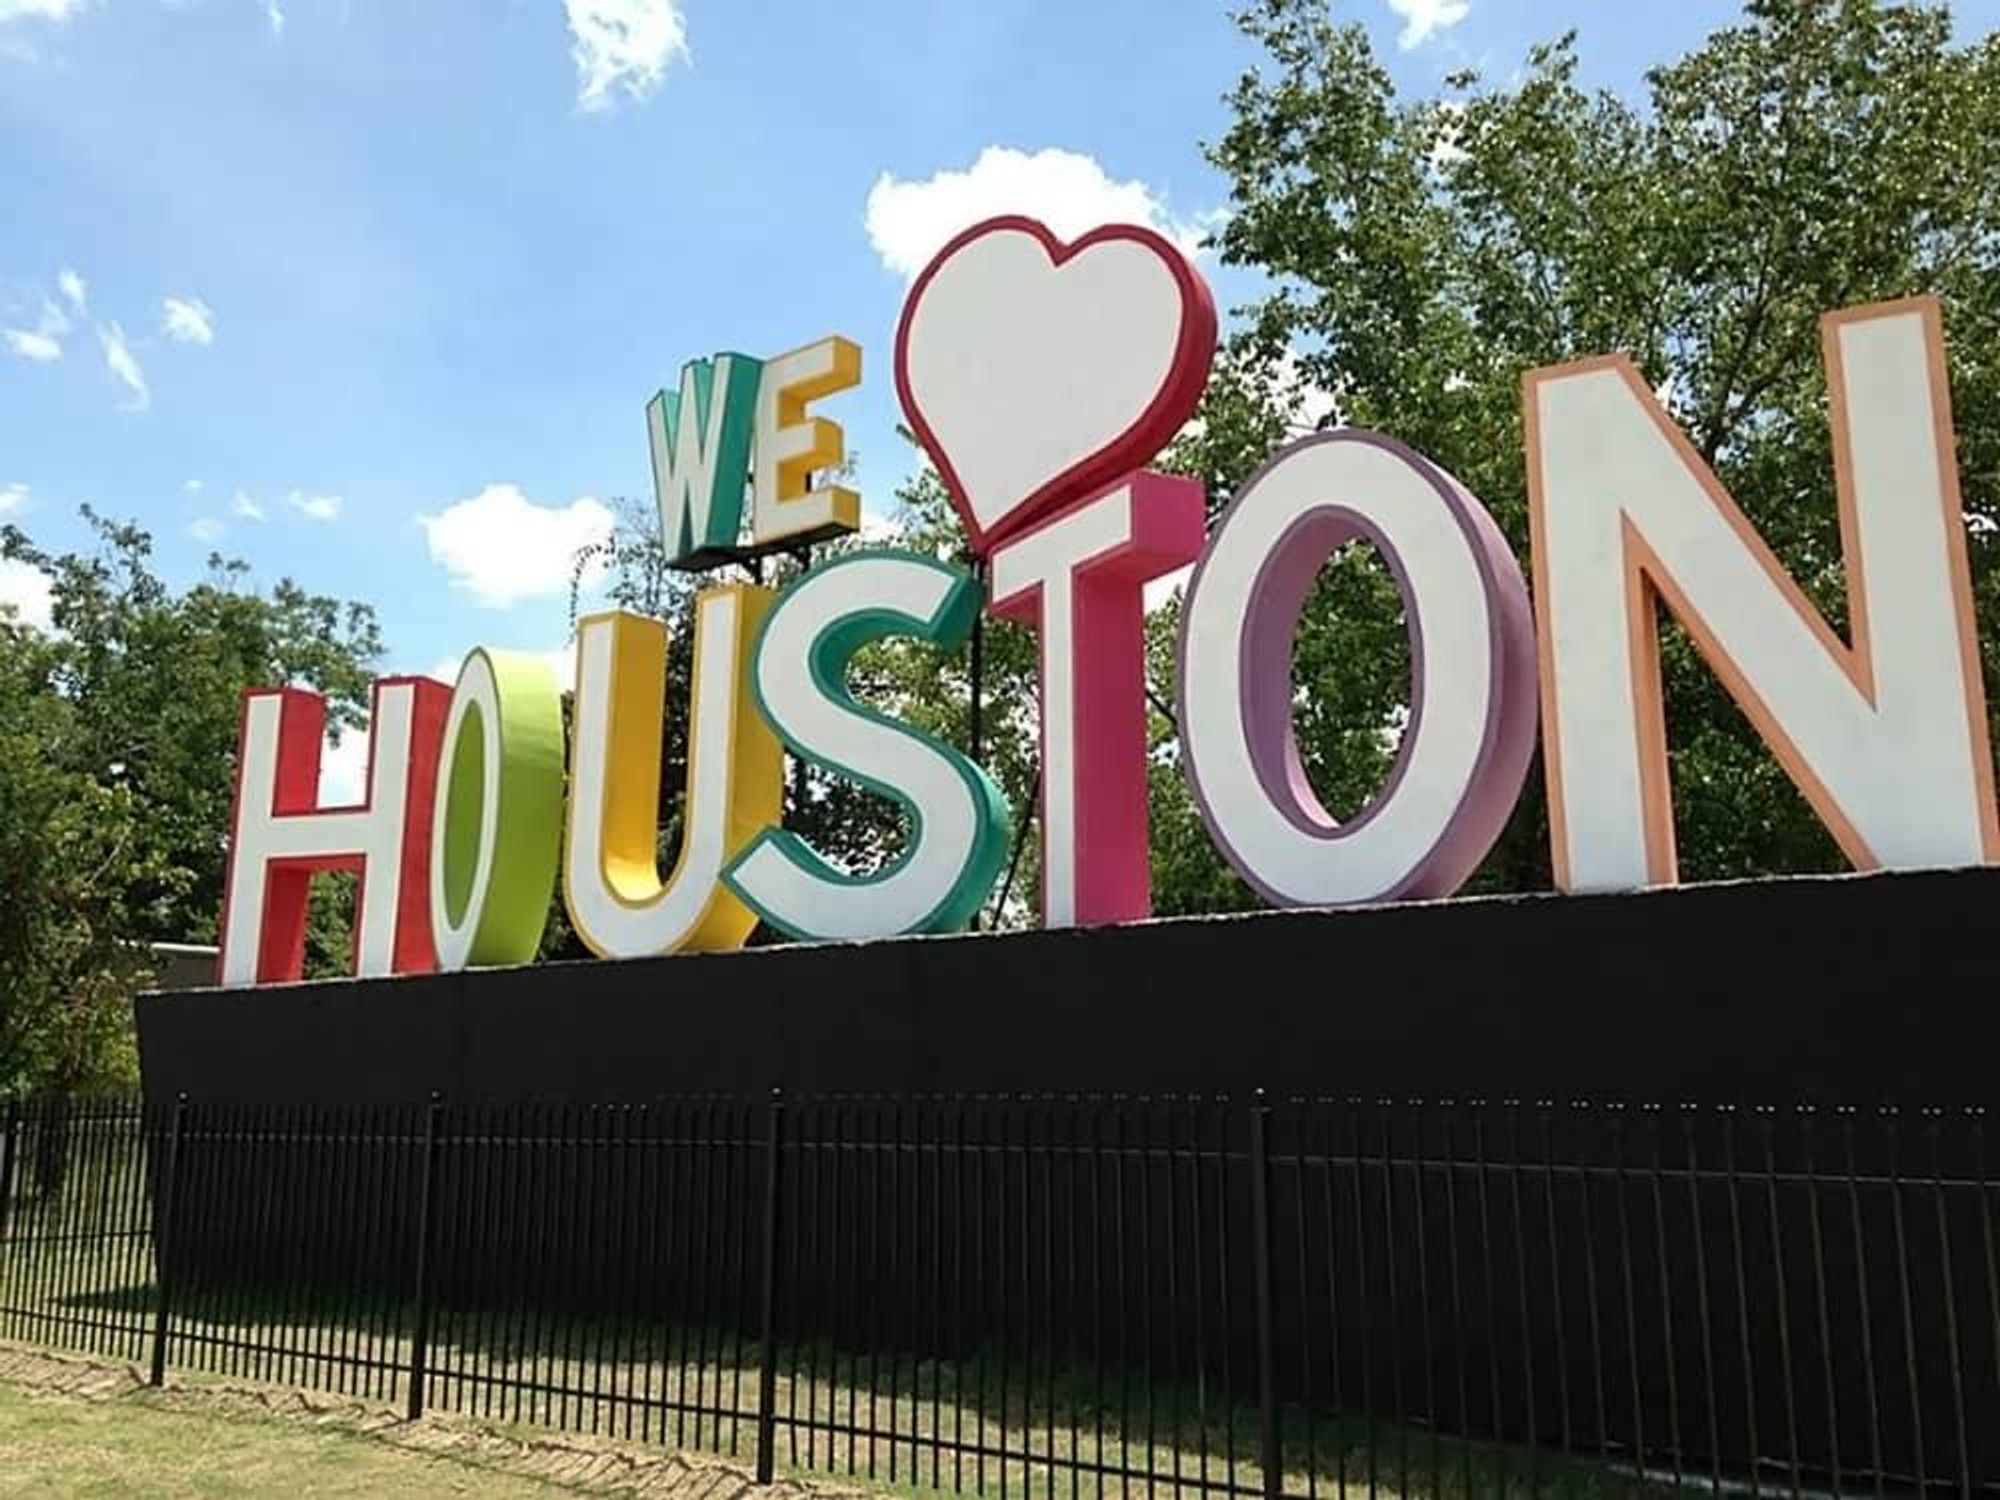 We Love Houston sign